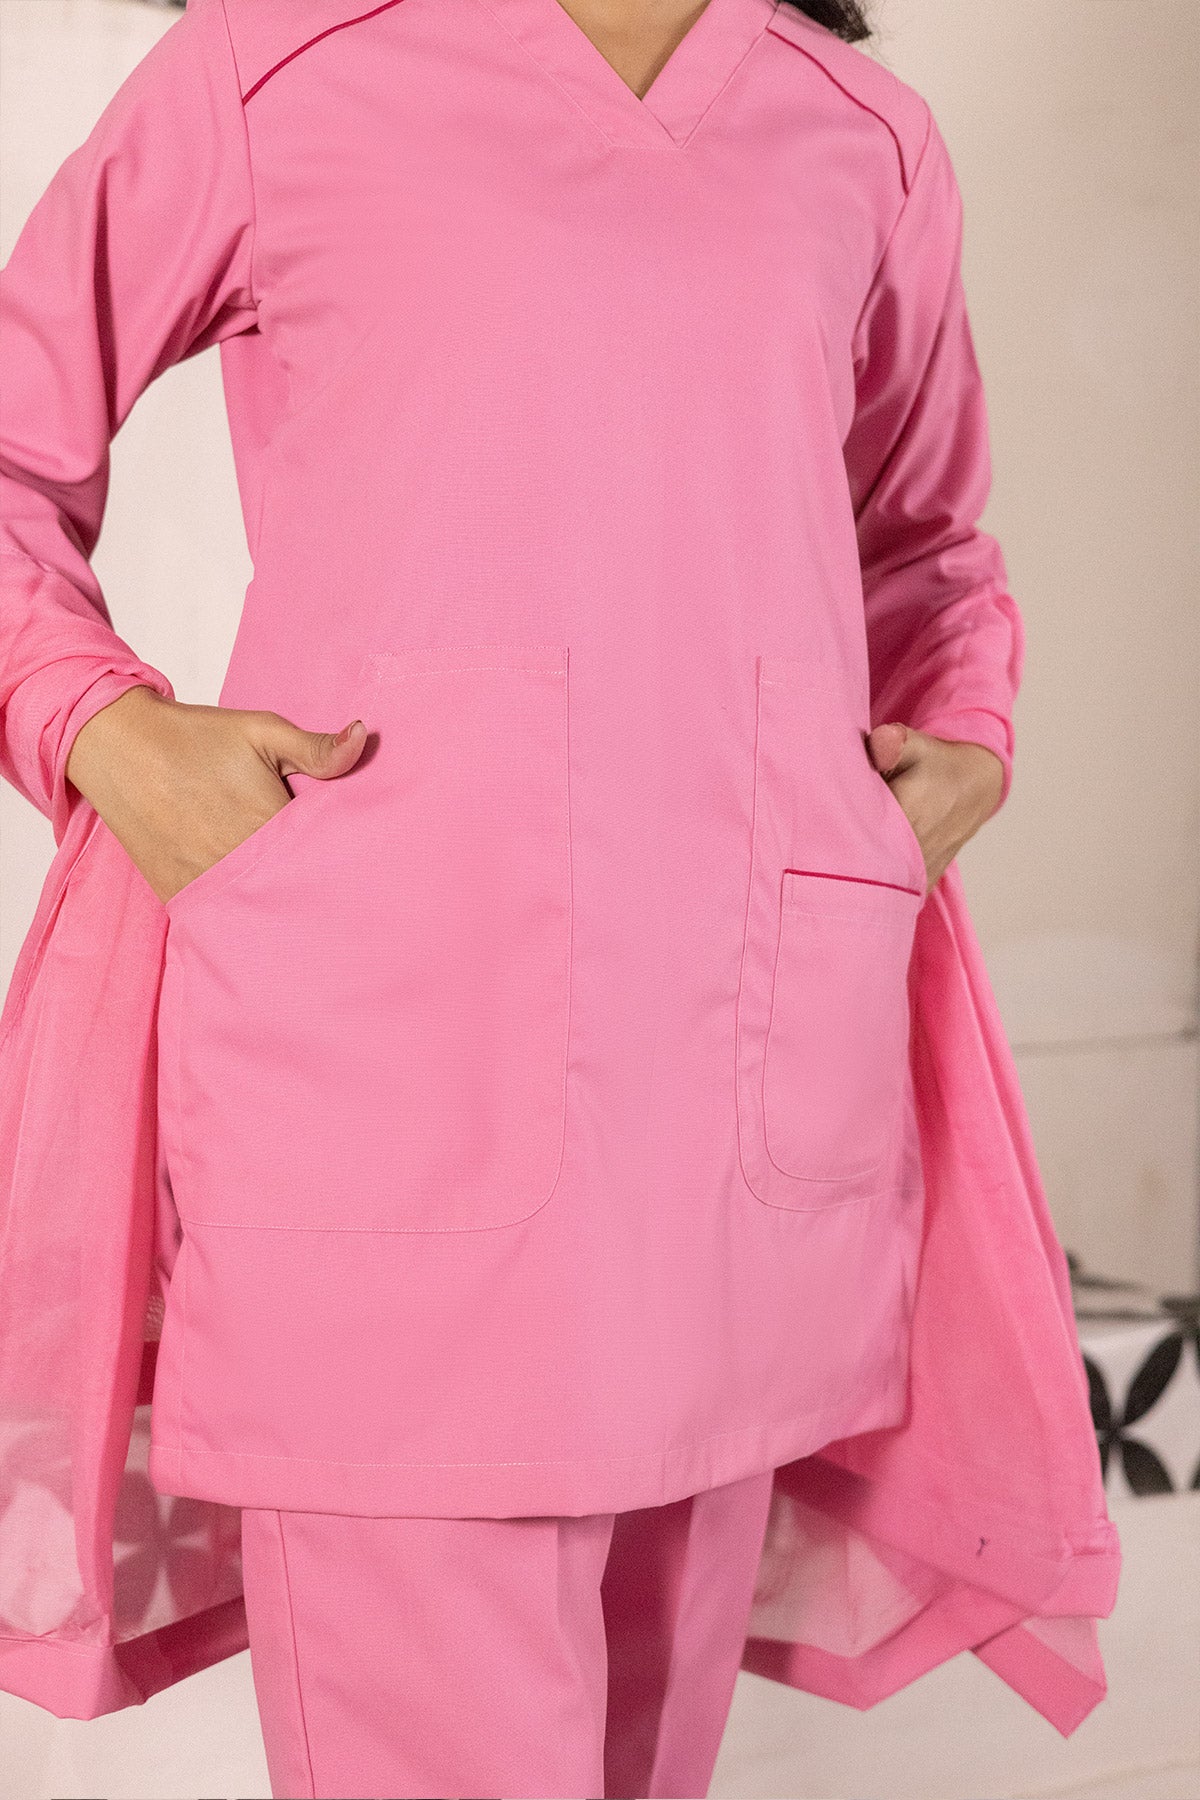 pink rosa-medical scrubs in Pakistan-2